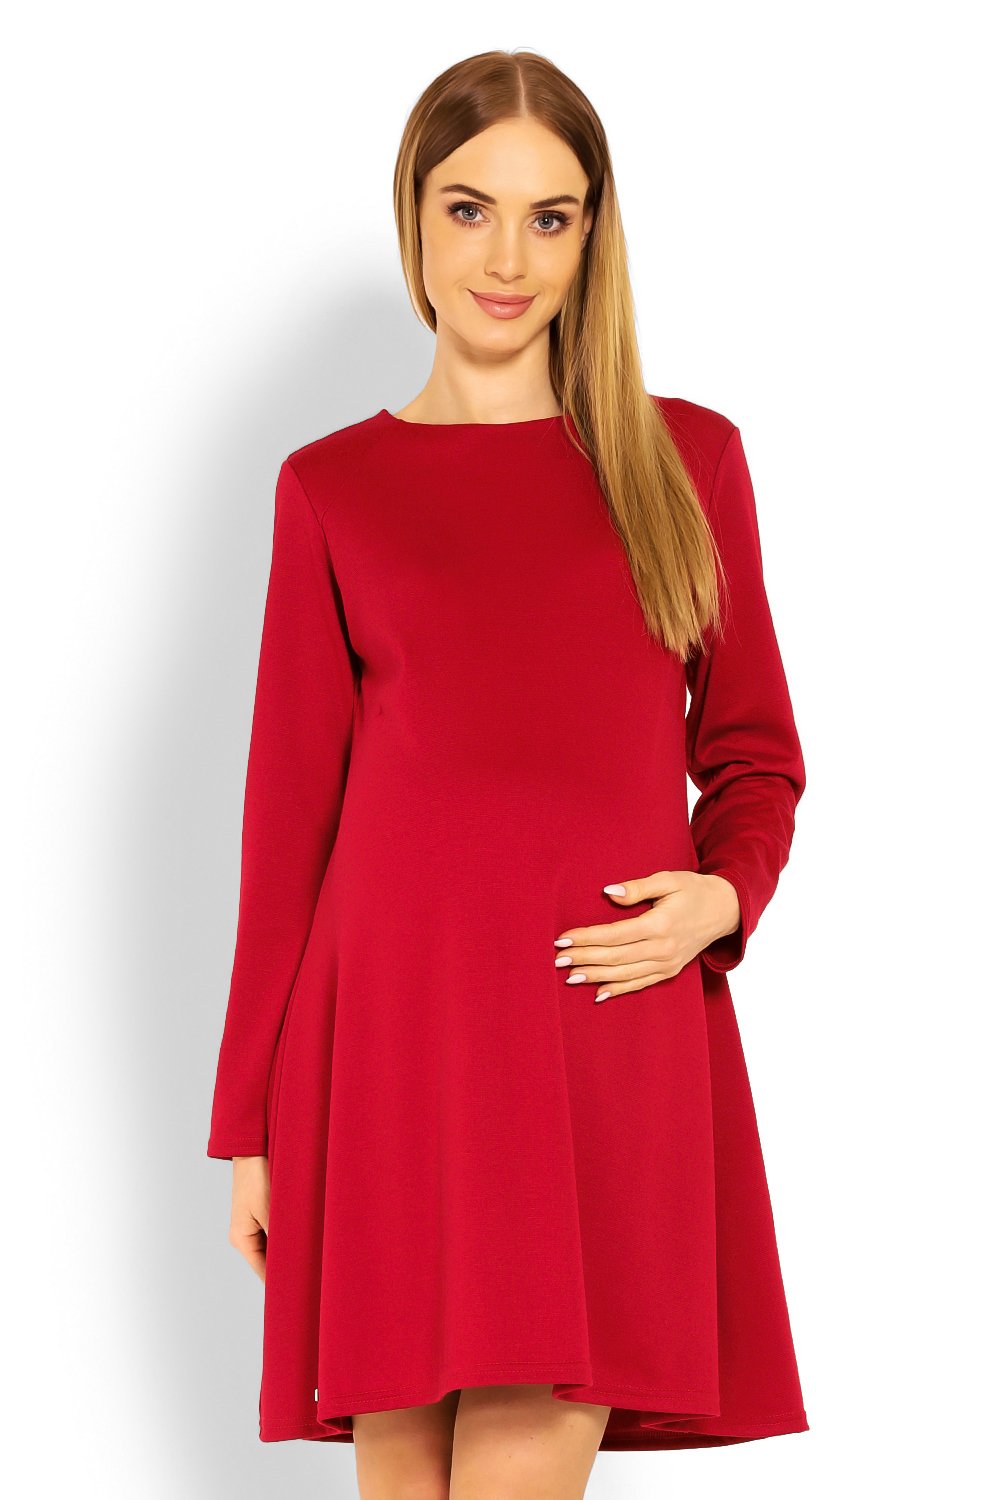 Pregnancy dress model 114509 P..